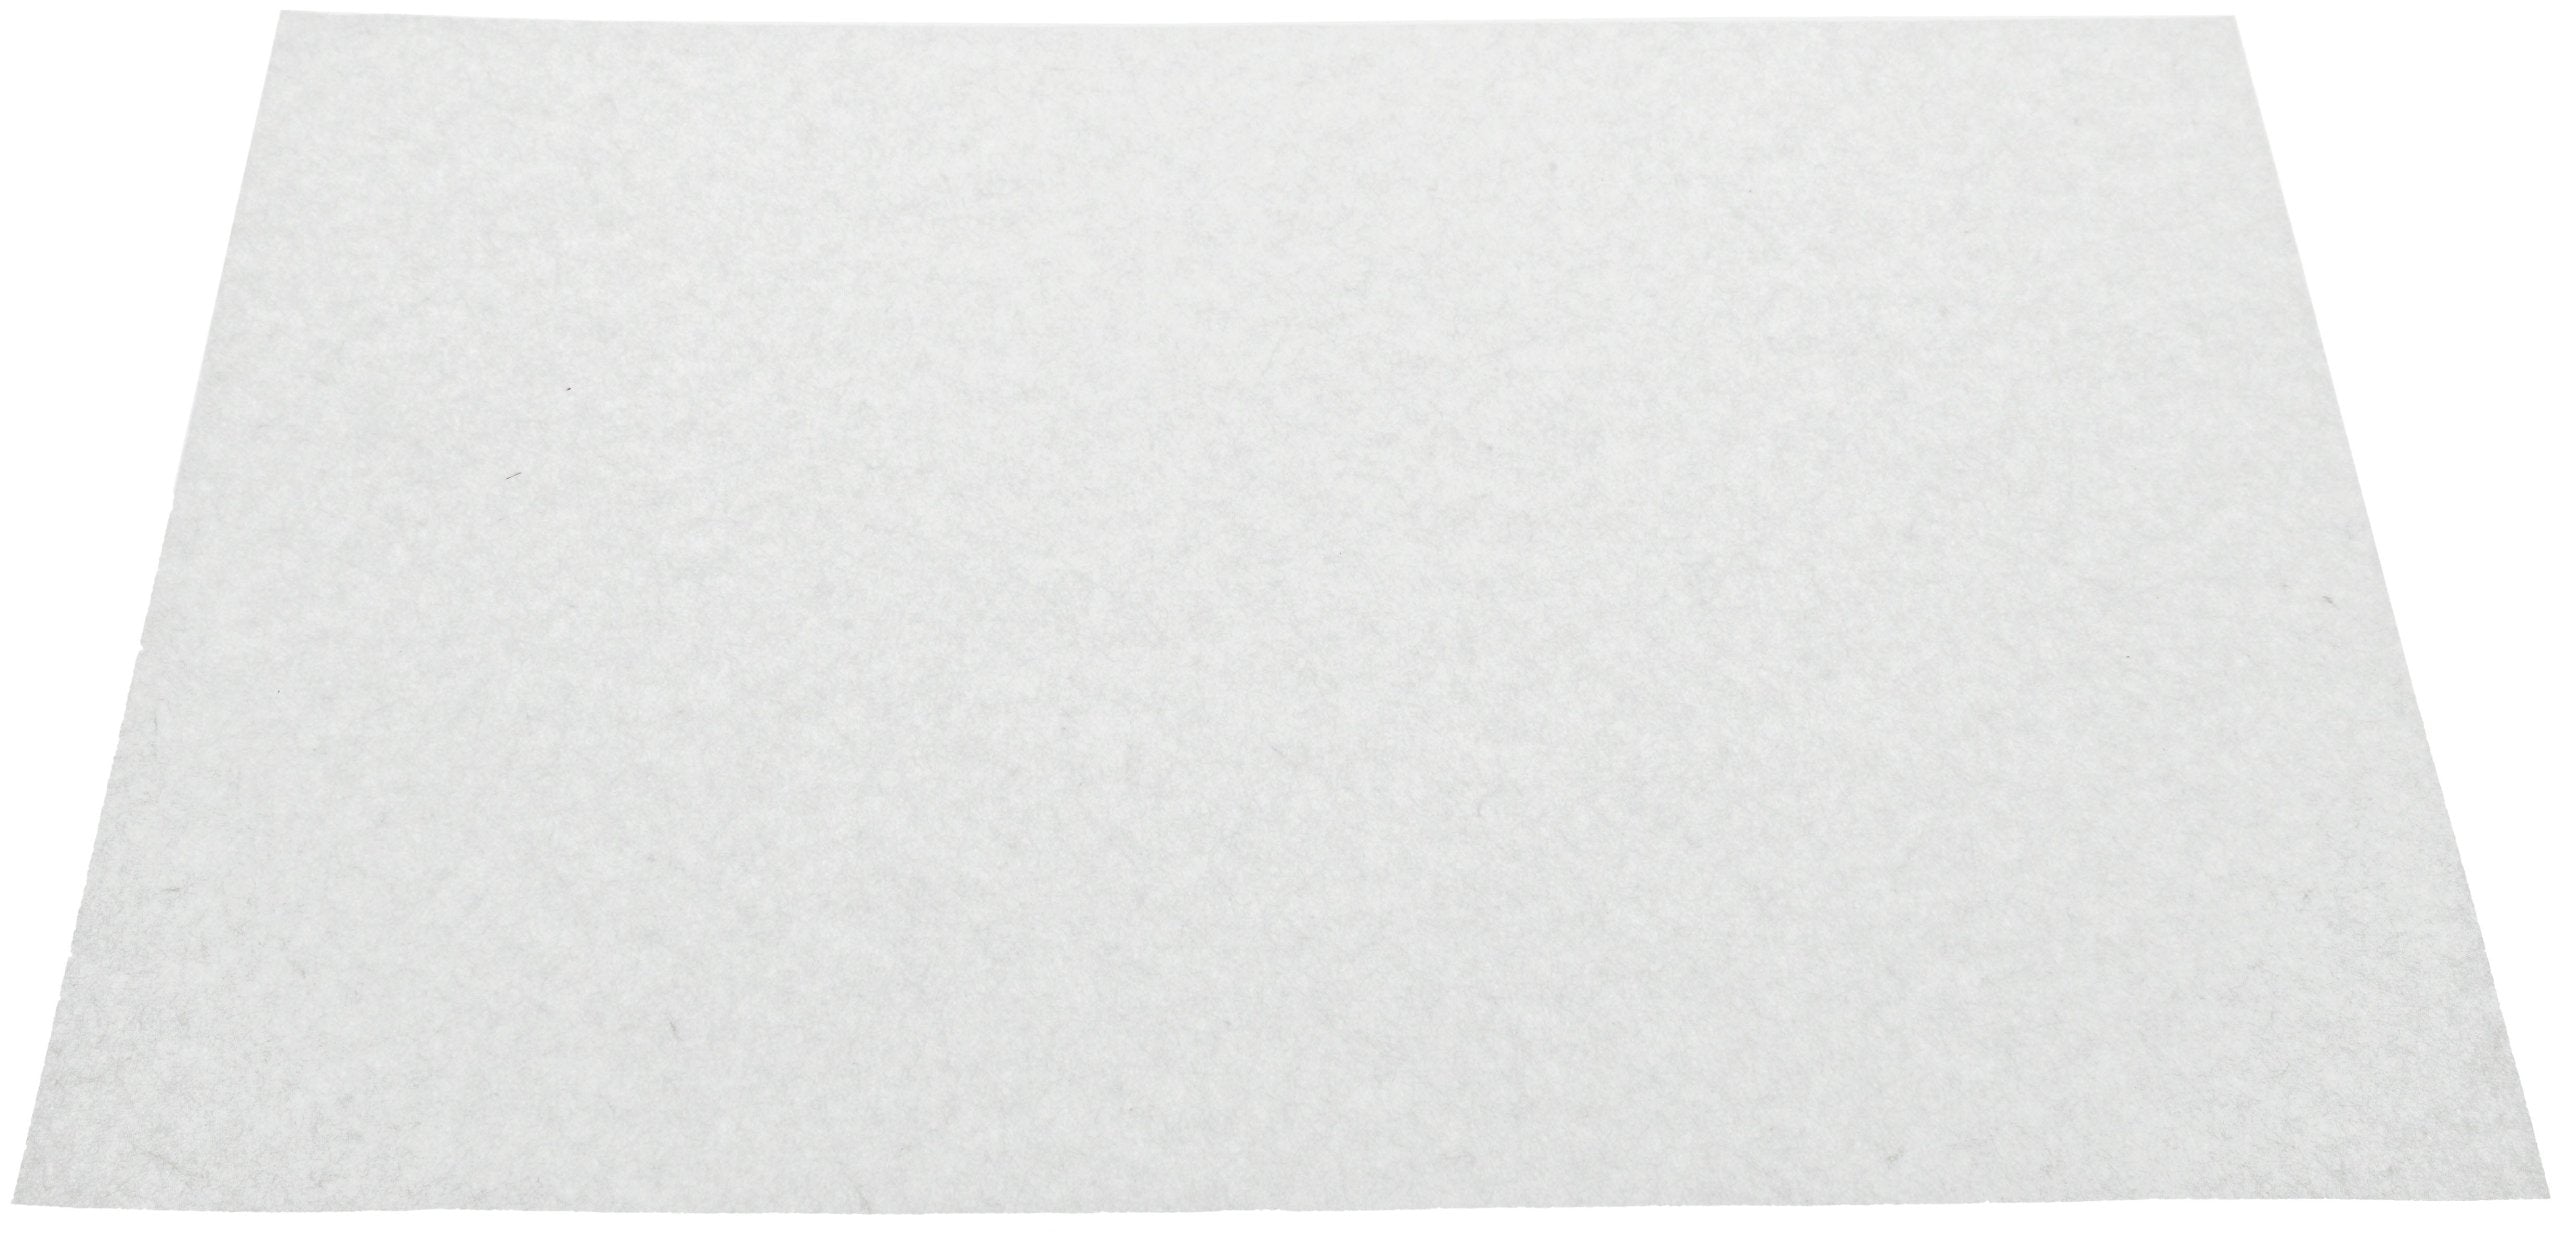 Whatman 10427826 Blotting Paper, Pure Cellulose, Grade GB003 Sheets, 46 x 57cm, 100/pk